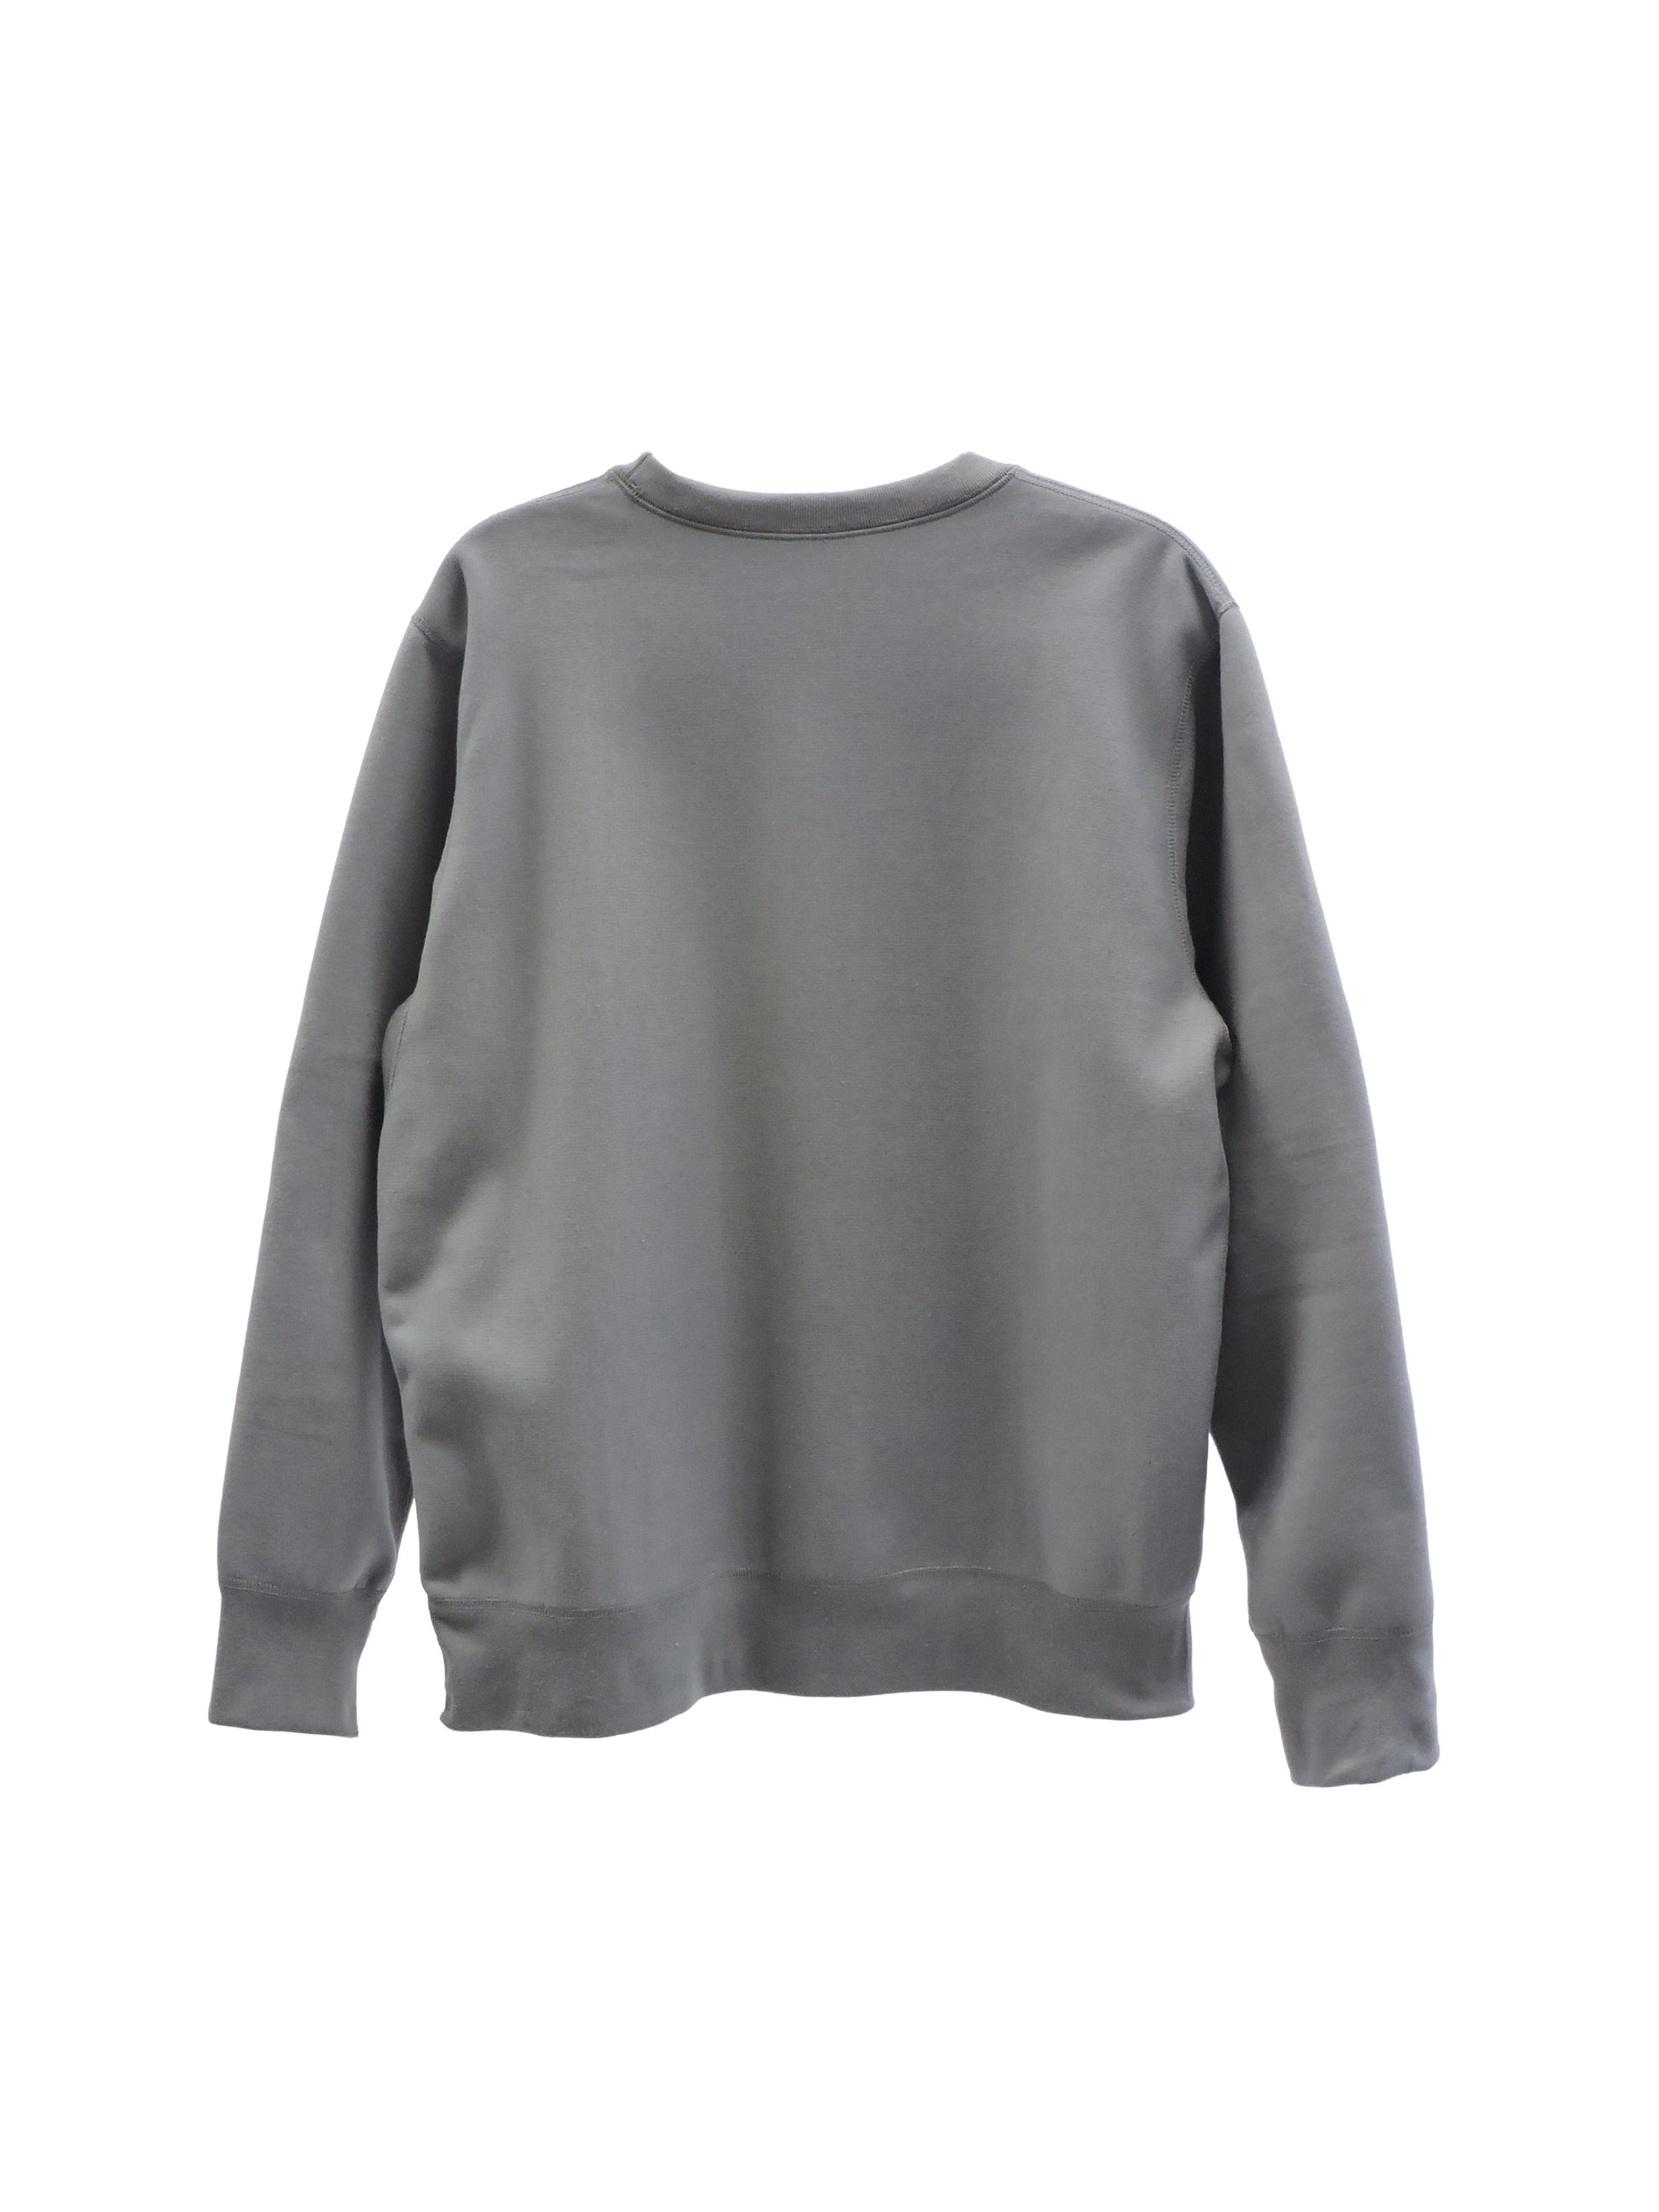 Back of Steel Grey Crewneck Sweater